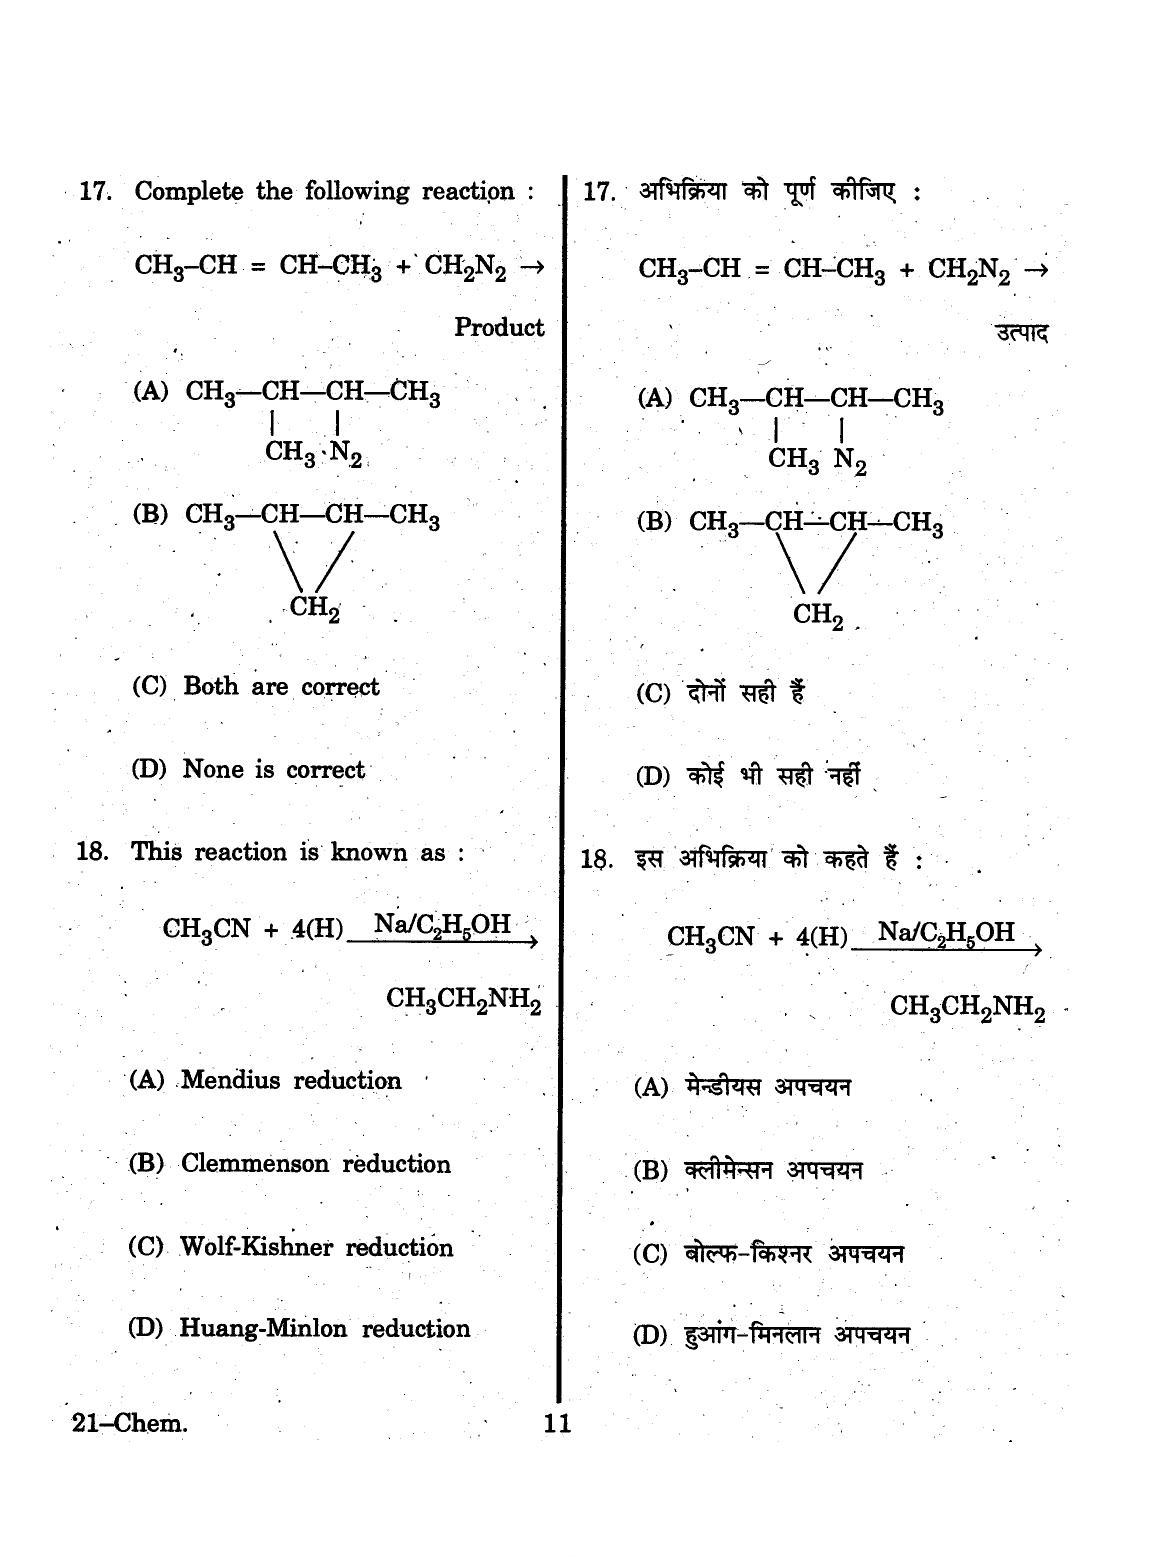 URATPG 2015 Chemisty Question Paper - Page 11